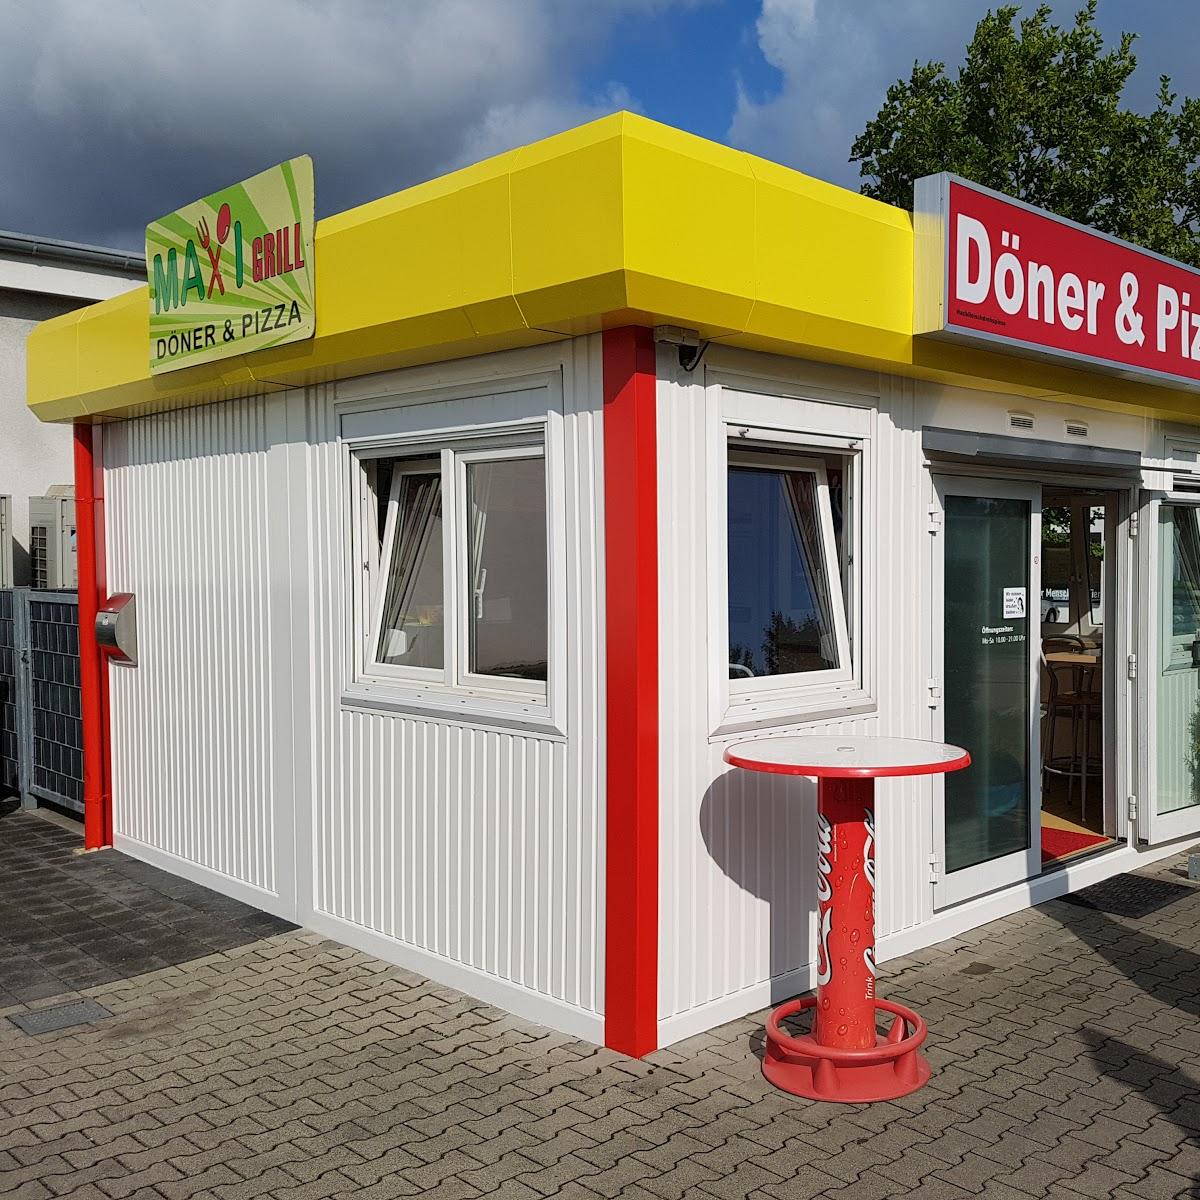 Restaurant "Maxi-Grill Döner & Pizza" in Murr